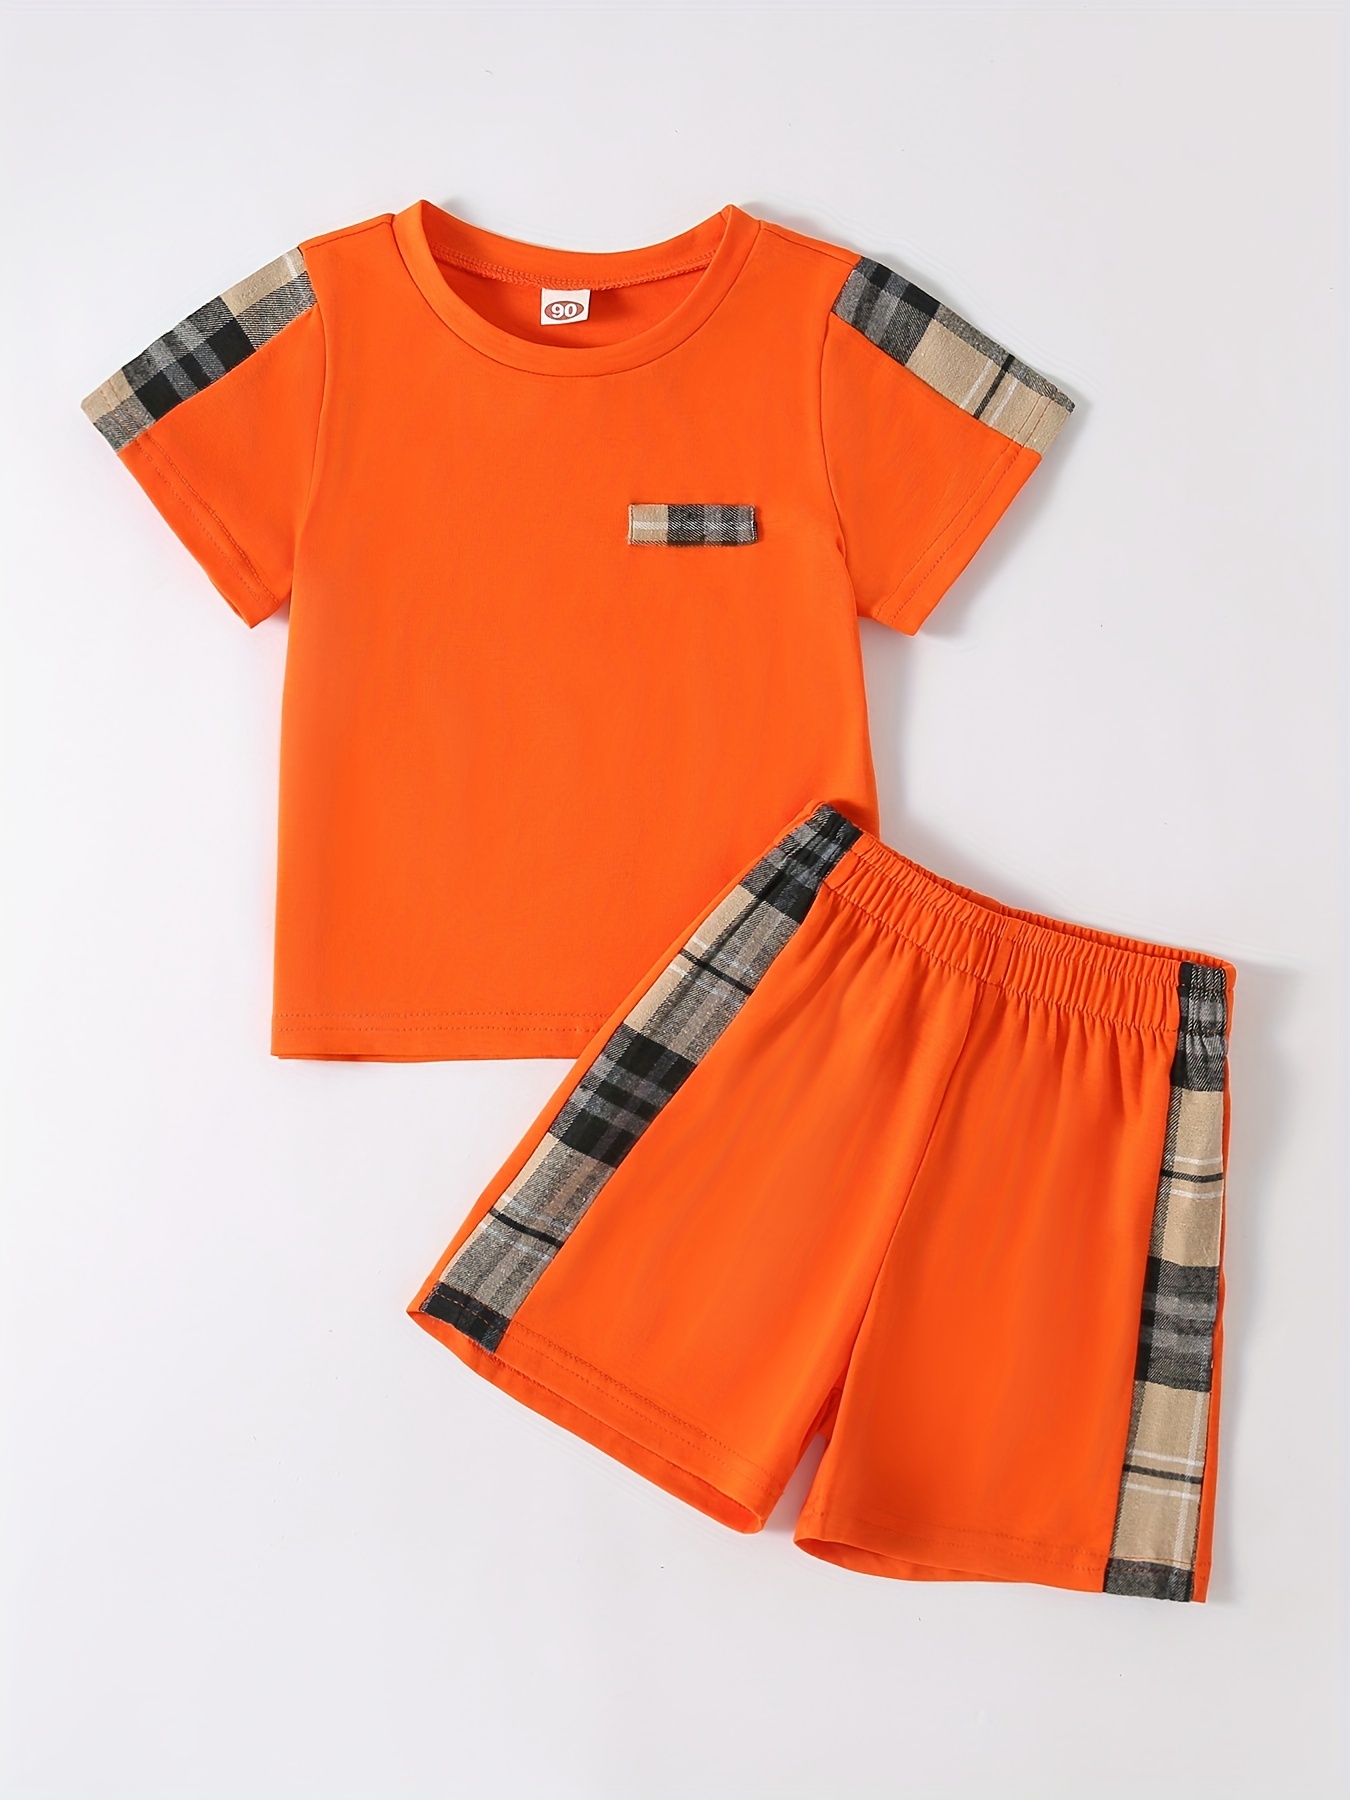 Baby Boy Designer Plaid T-Shirts Tops and Pants